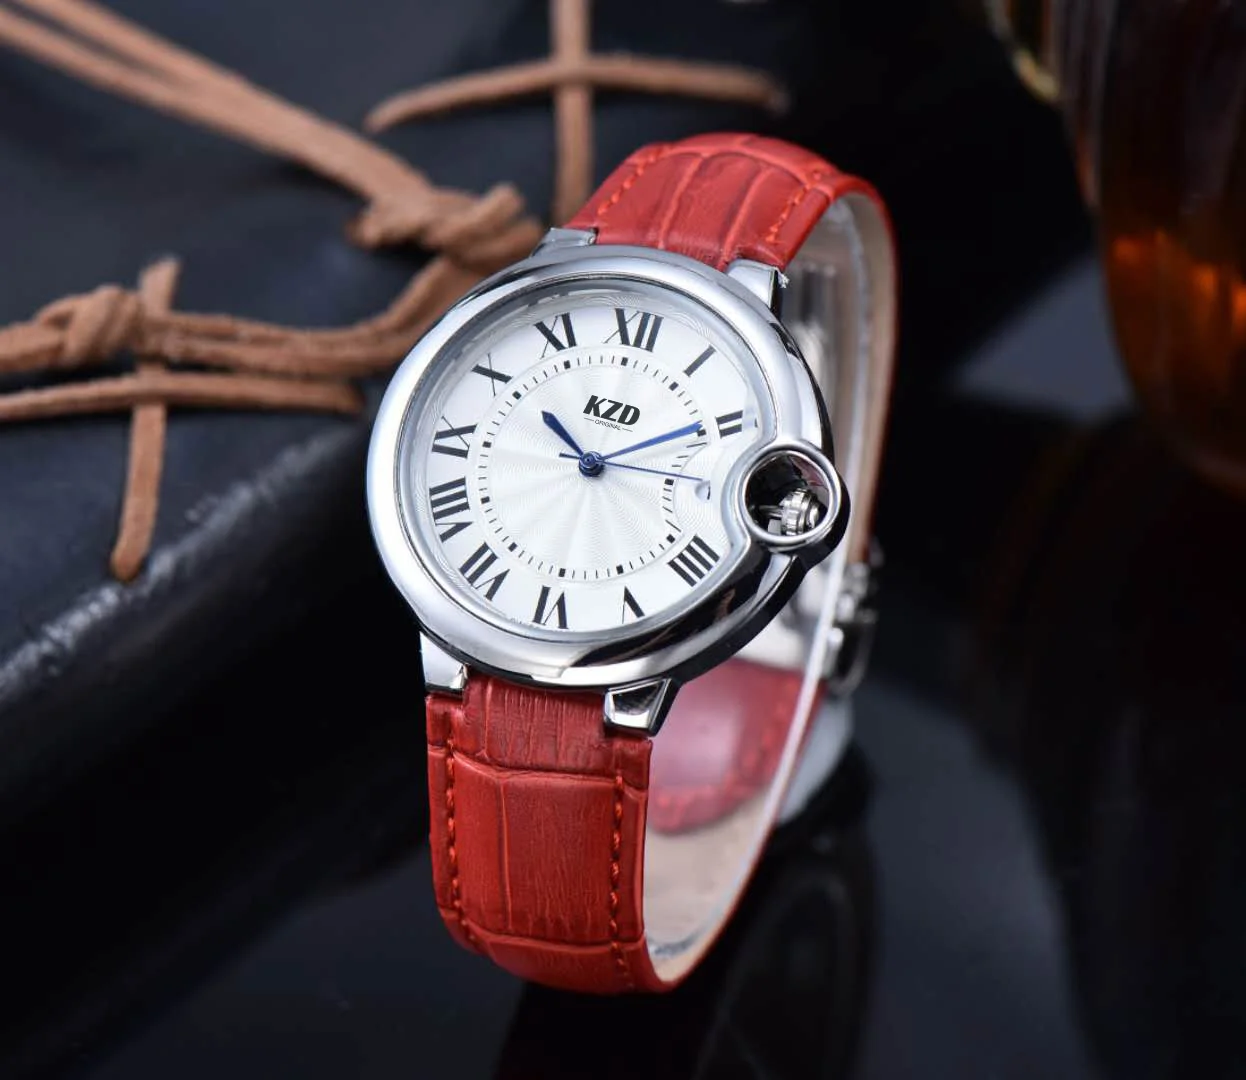 Trendy Forward Original Brand Design High-end Women's Watches Quartz Movement Leather Strap Design Waterproof AAA Clock Present enlarge